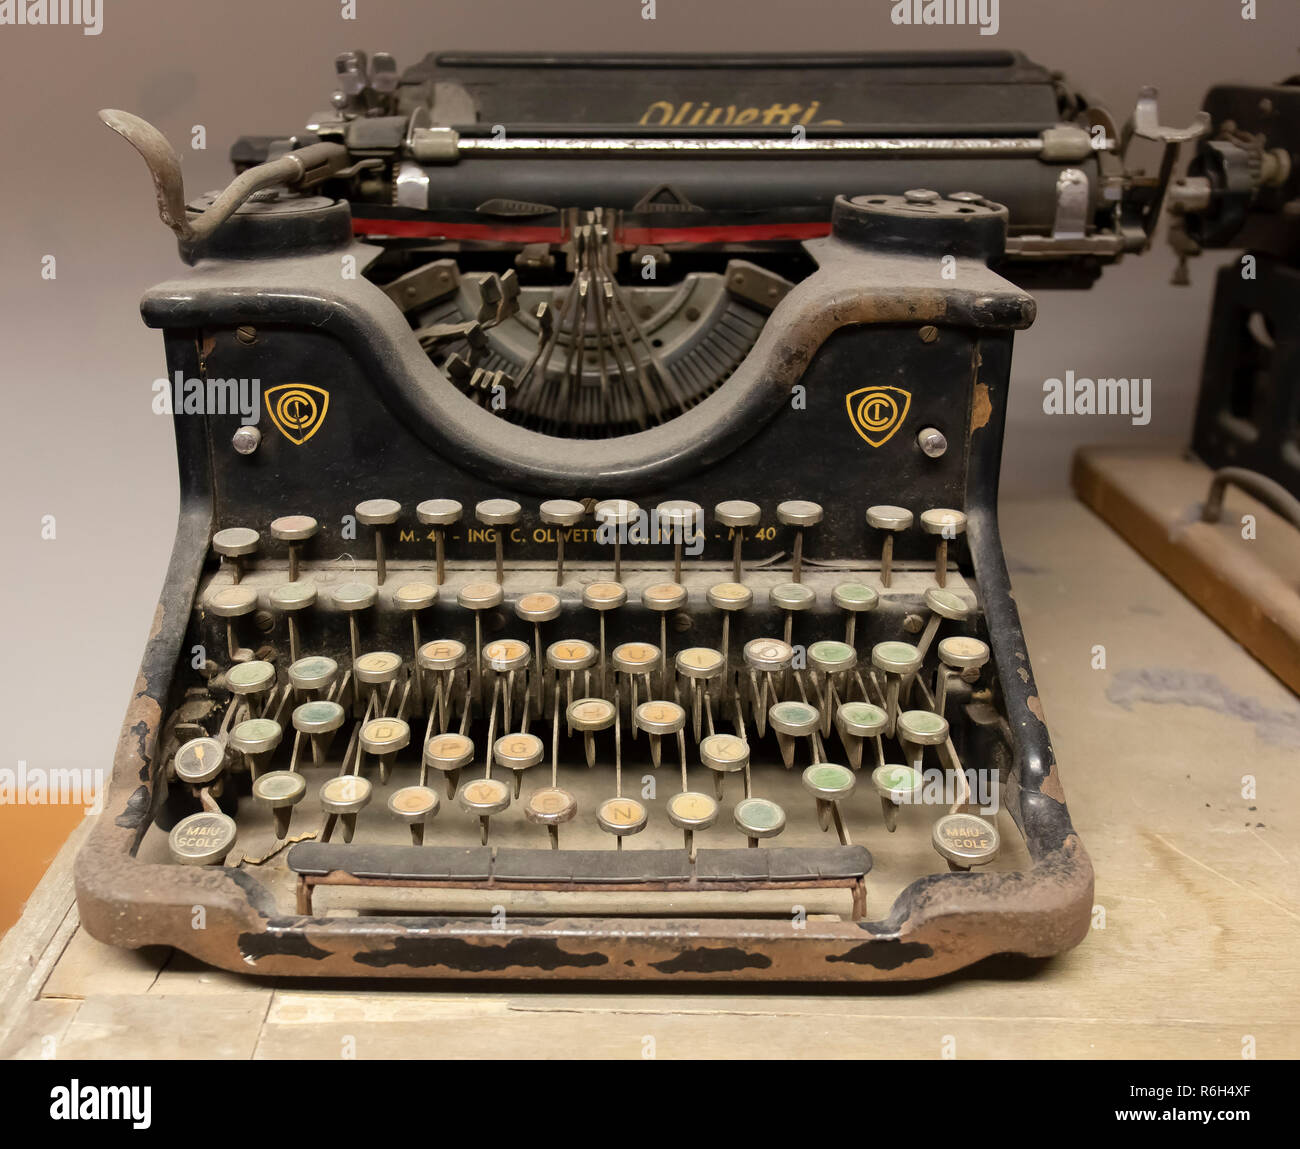 Vintage Olivetti italian typewriter Stock Photo